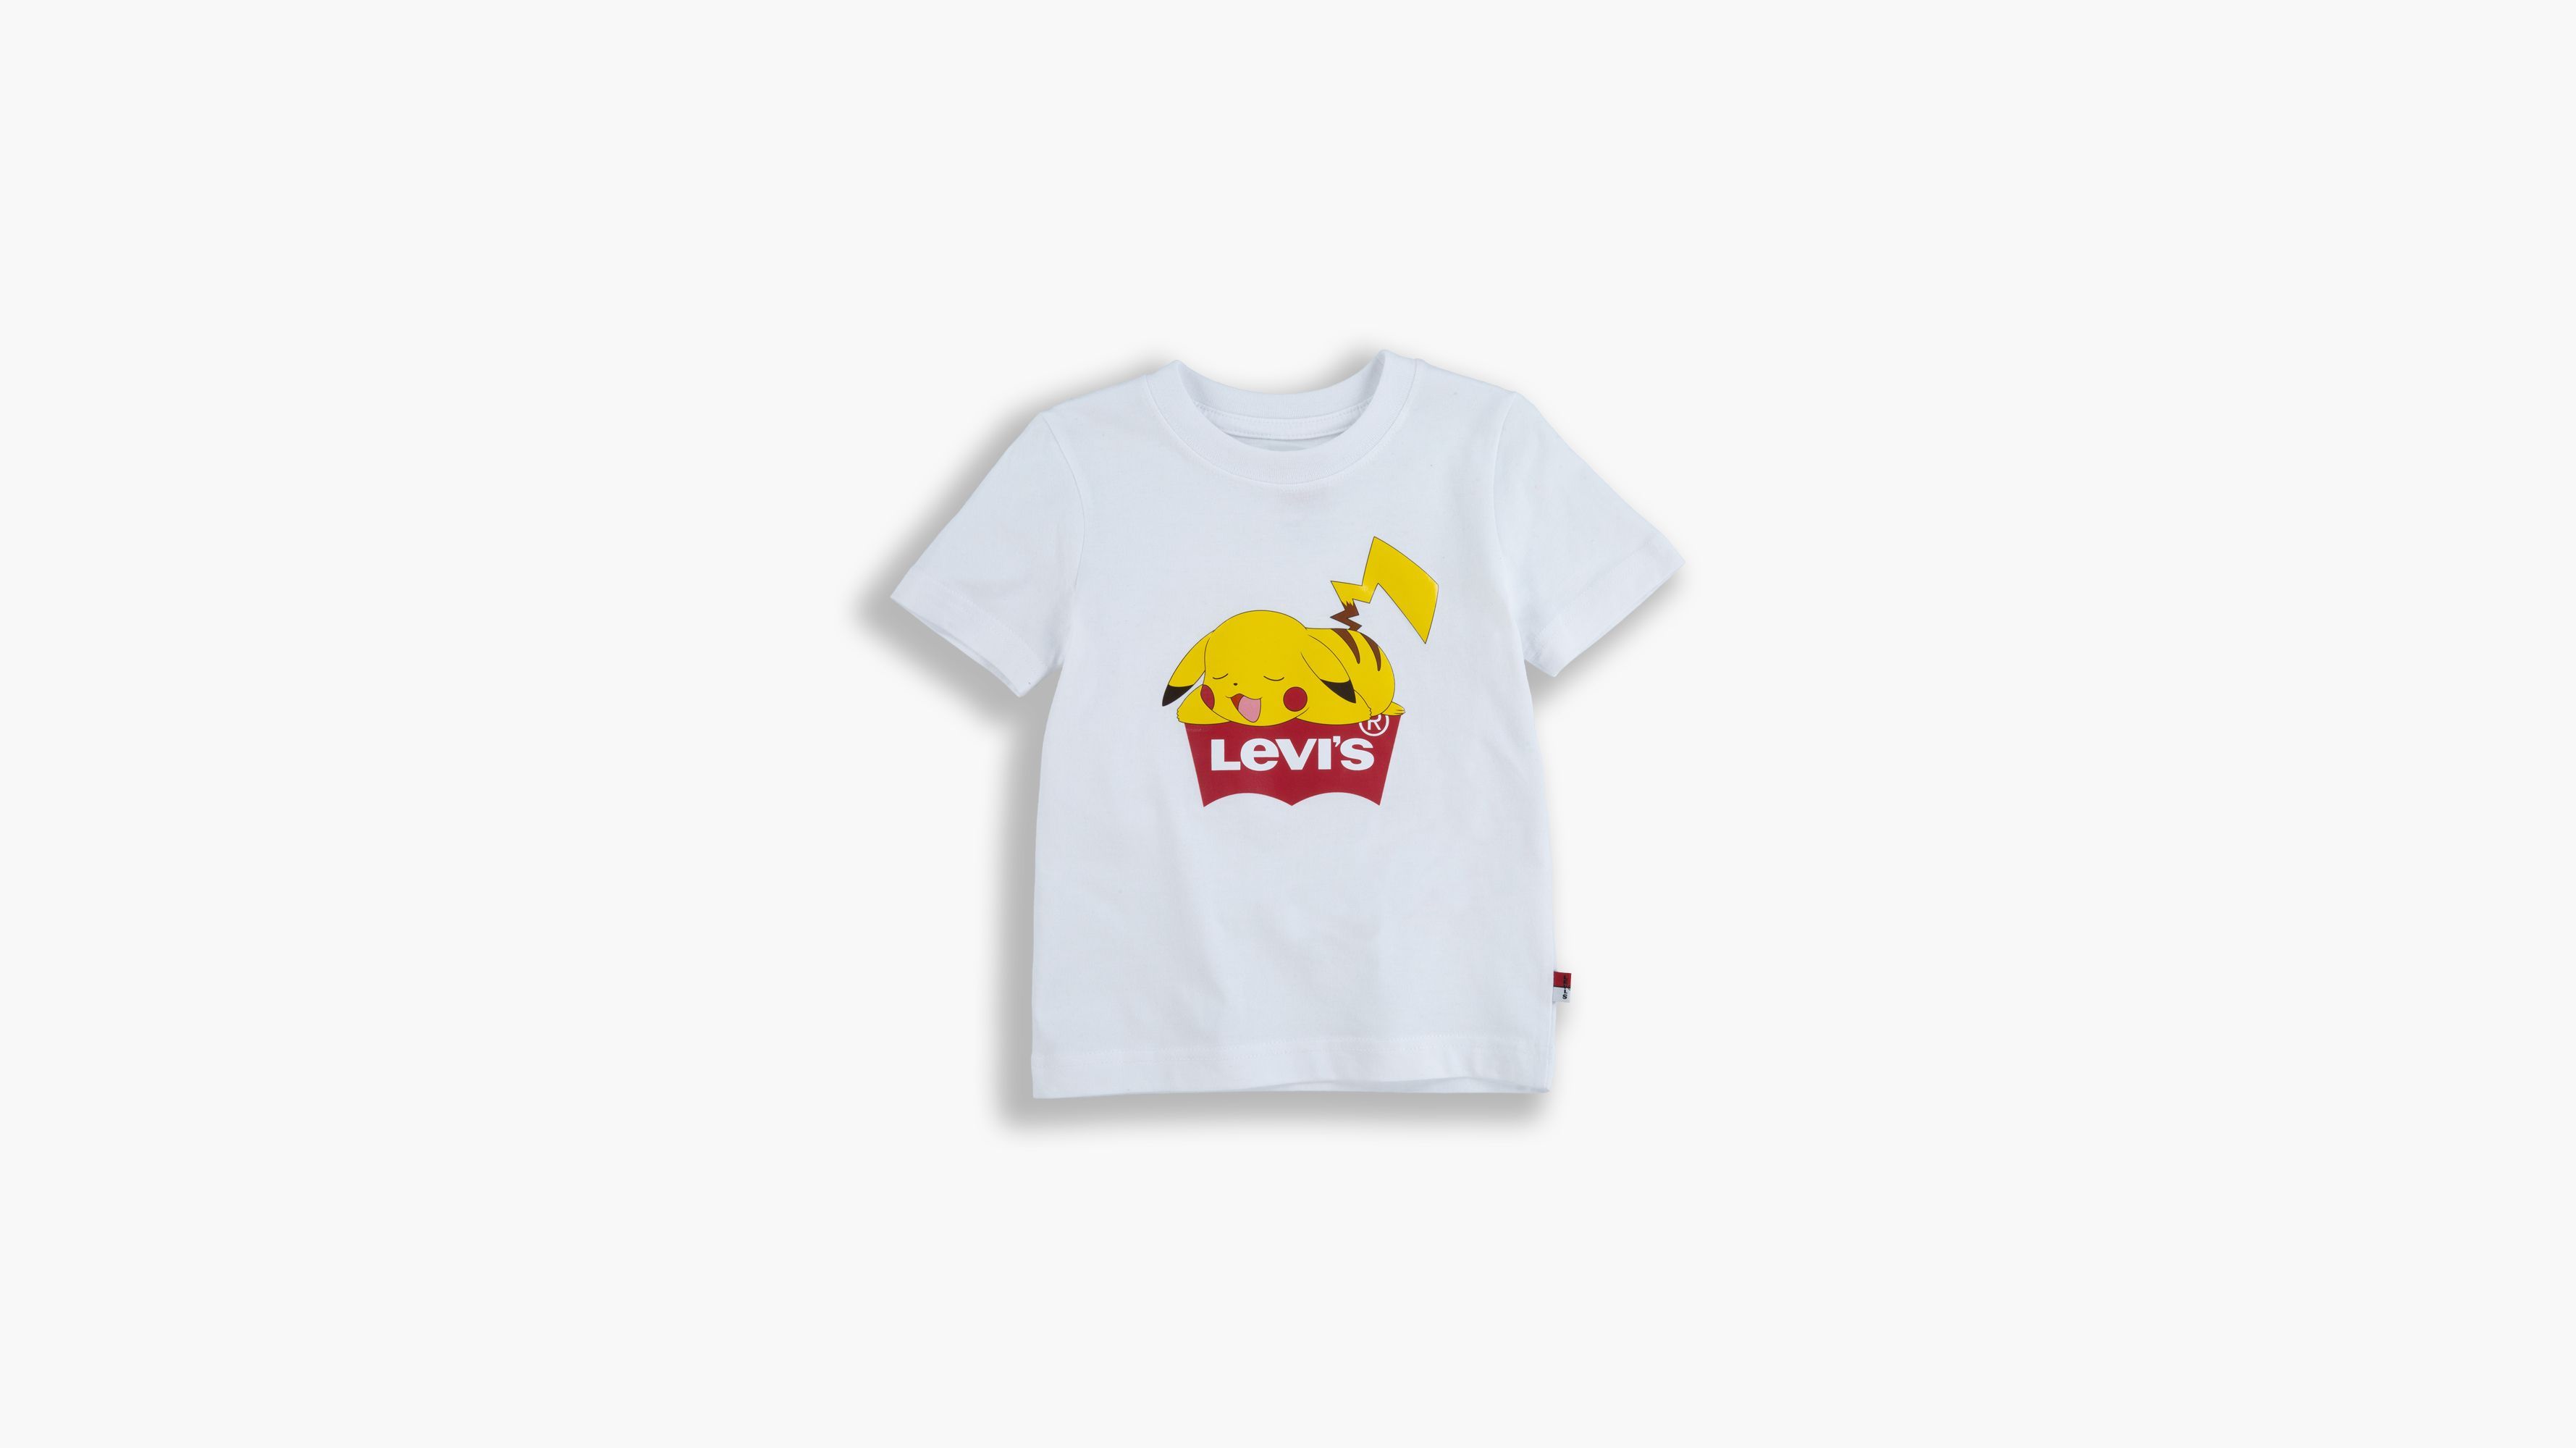 levis shirts kids